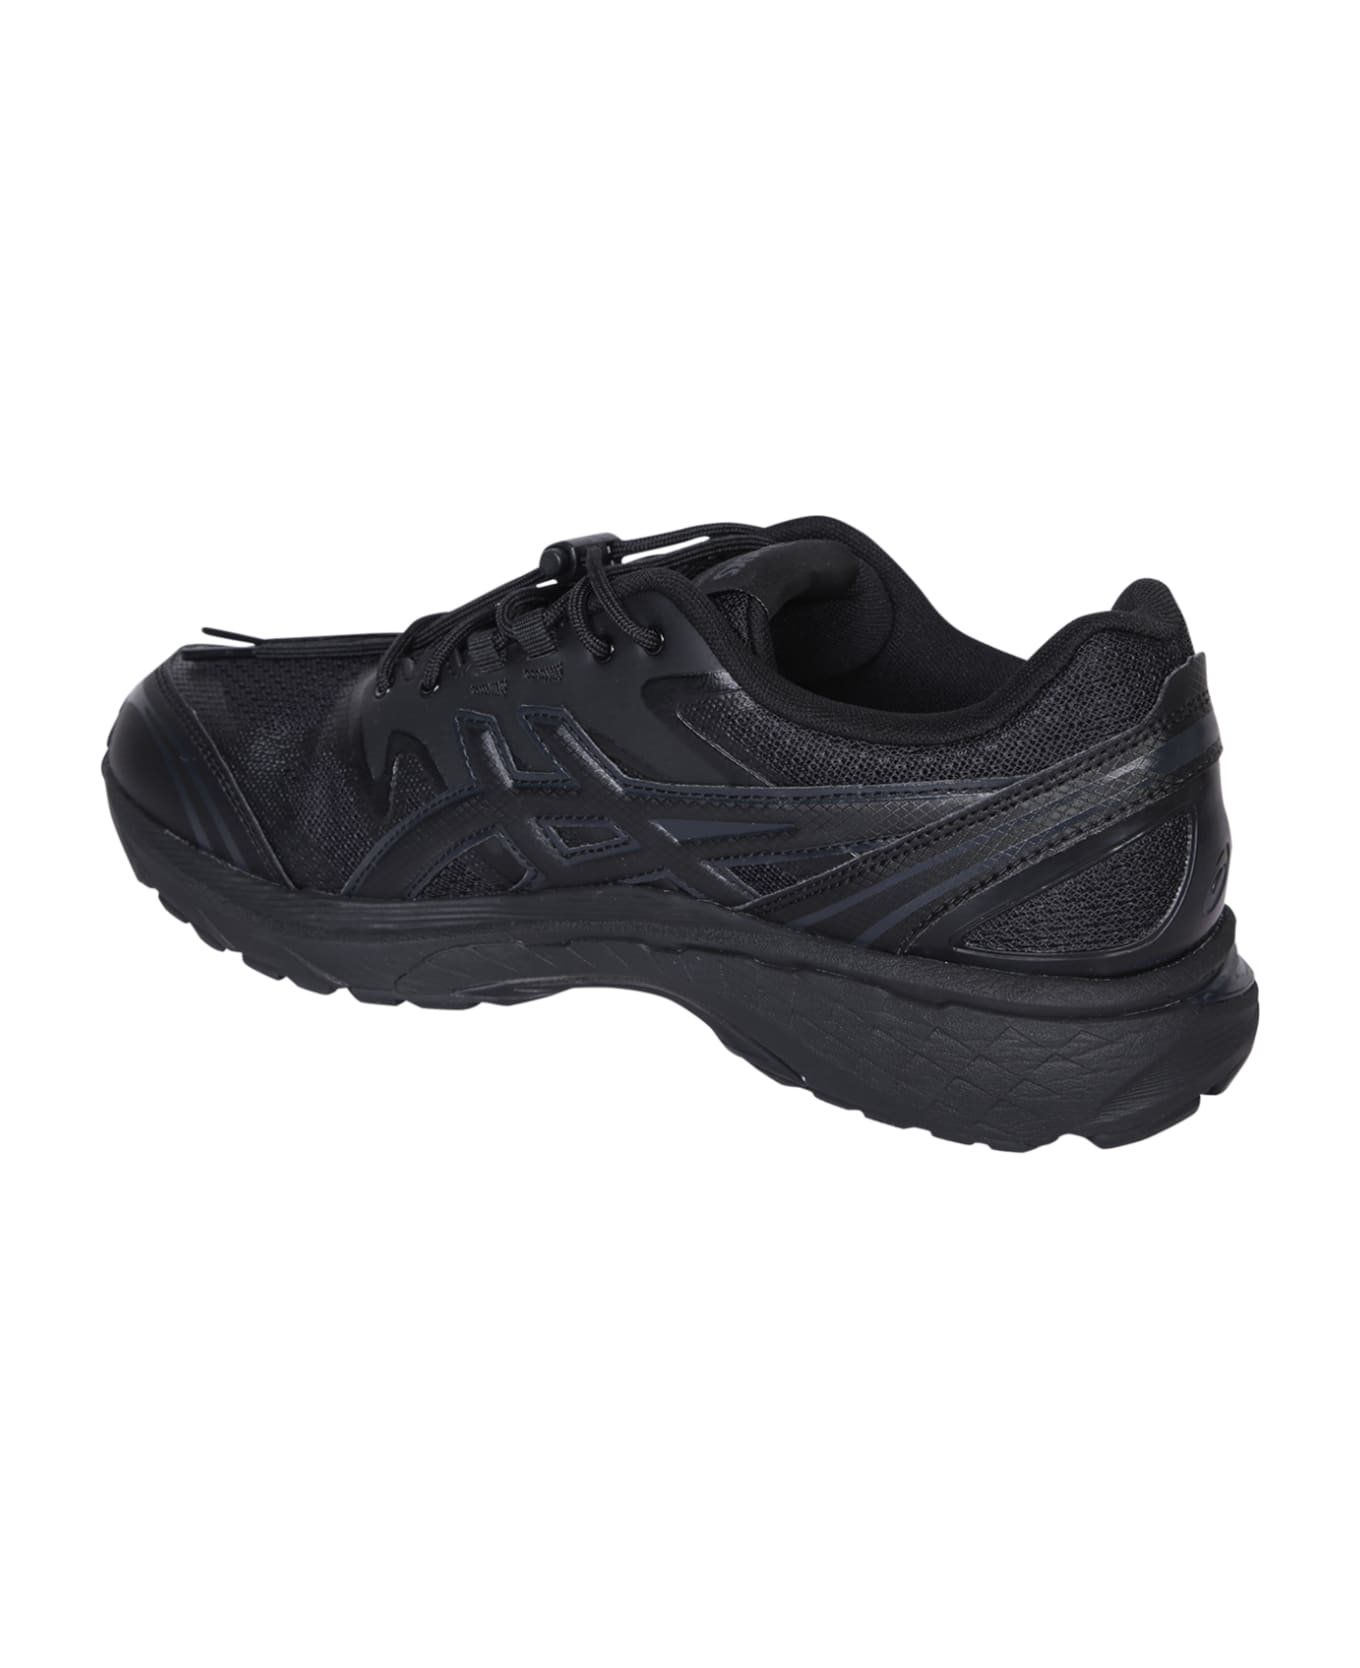 Delirious Runner Black Sneakers - Black